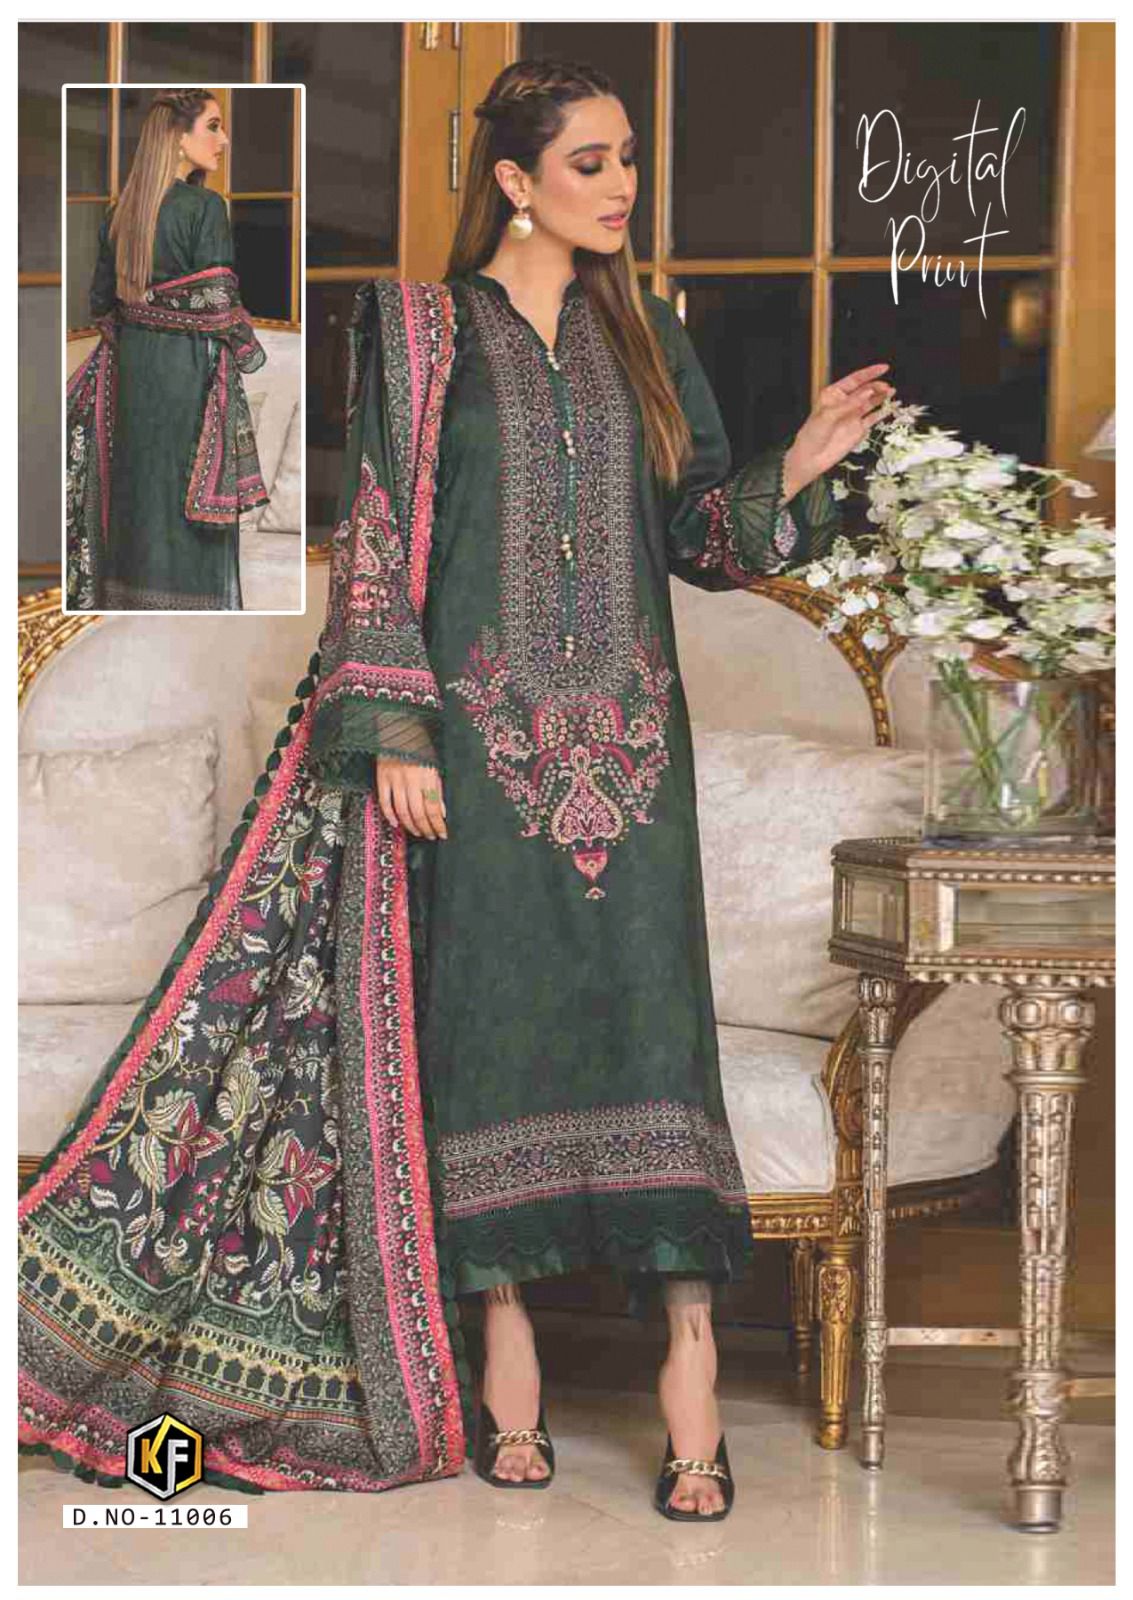 Sobia Nazir Vol 11 Keval Fab Cotton Karachi Salwar Suits